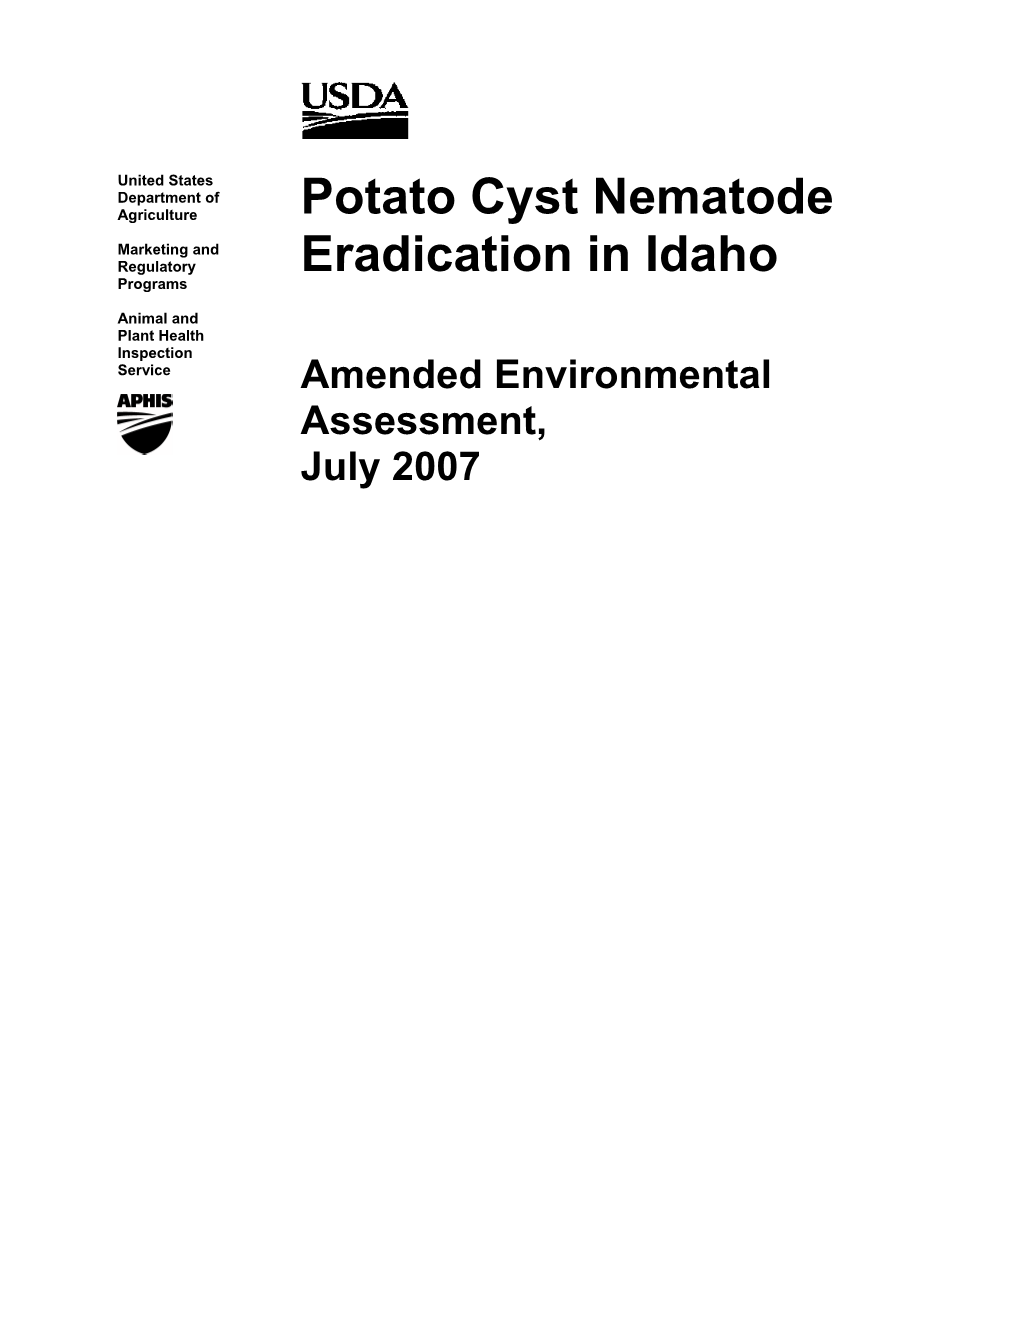 Potato Cyst Nematode Eradication in Idaho